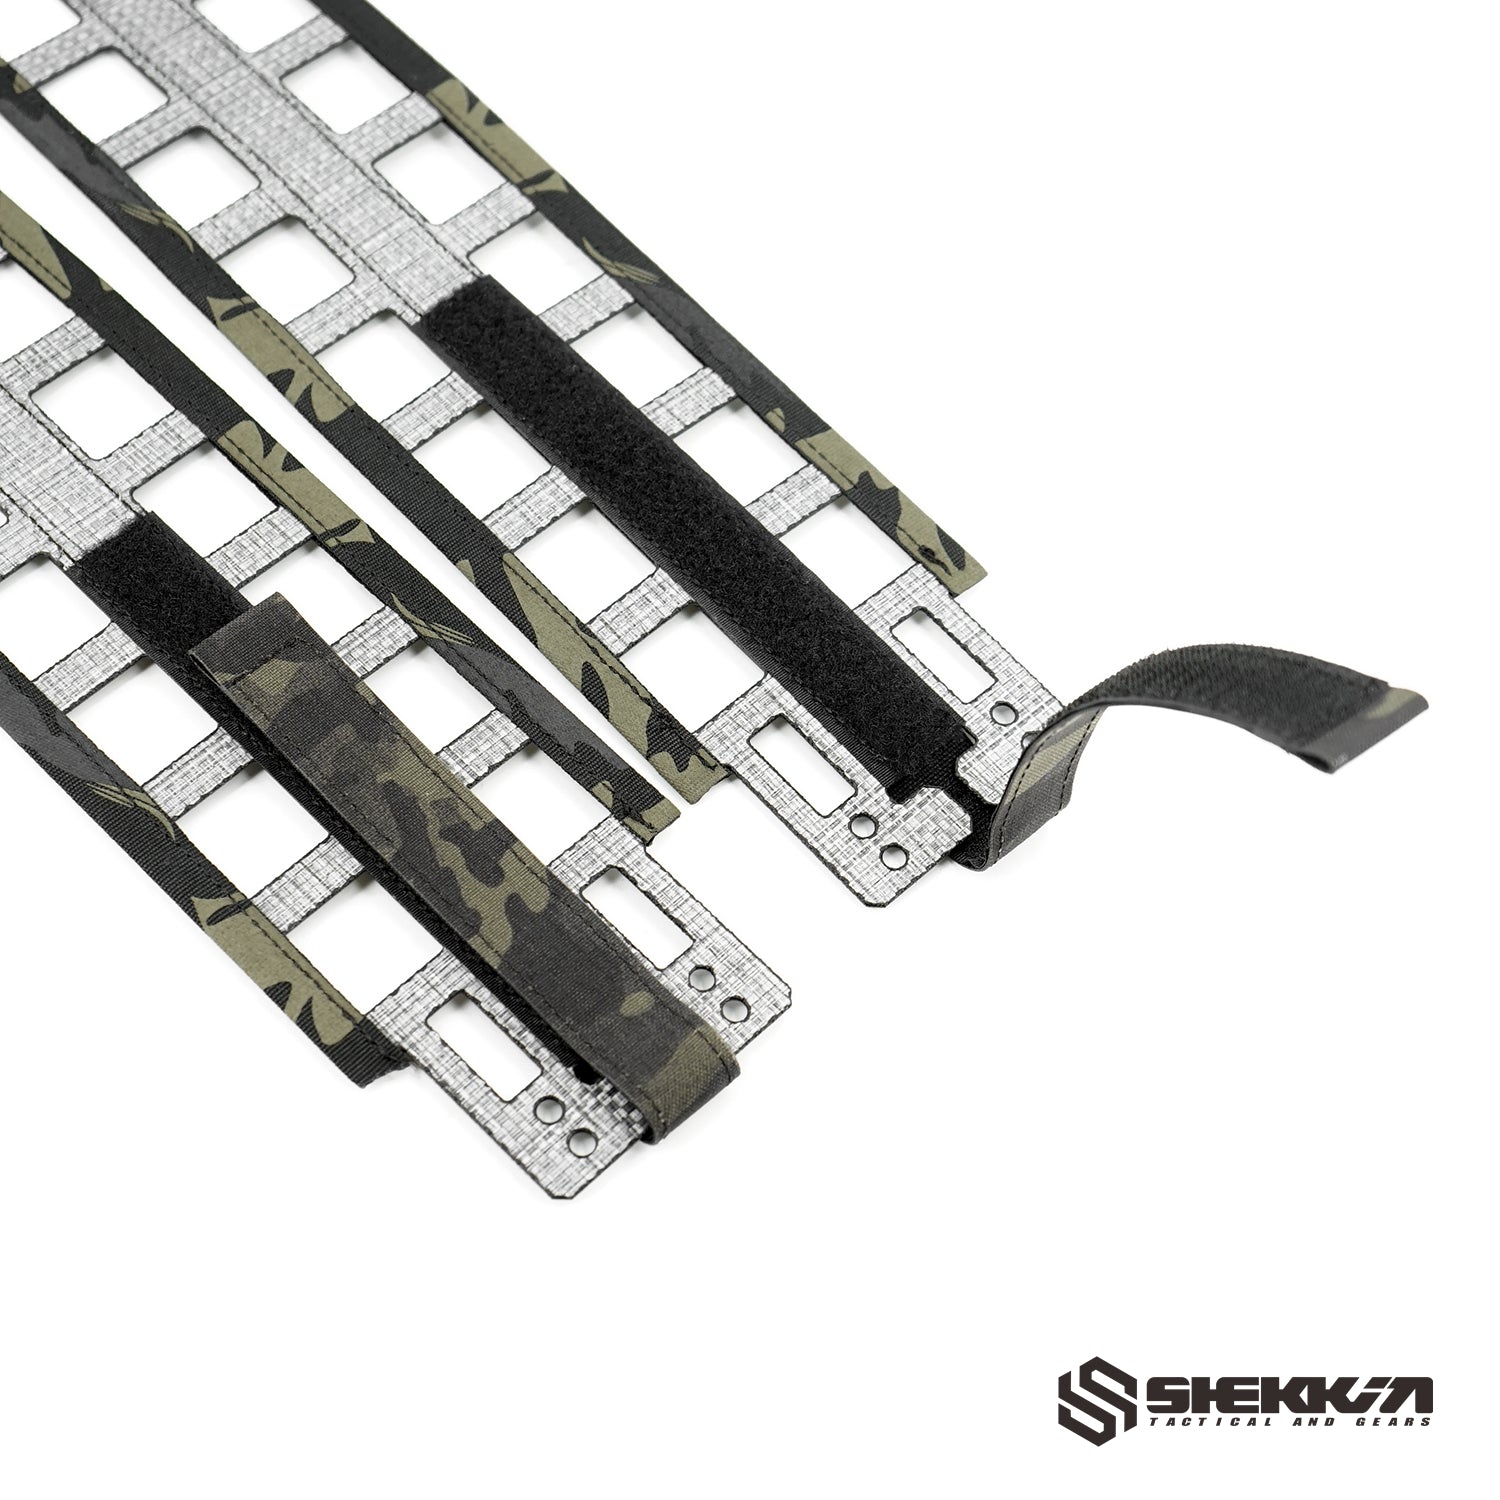 Tegris cummerbund for 6094G3 upgrades - Shekkin Gears